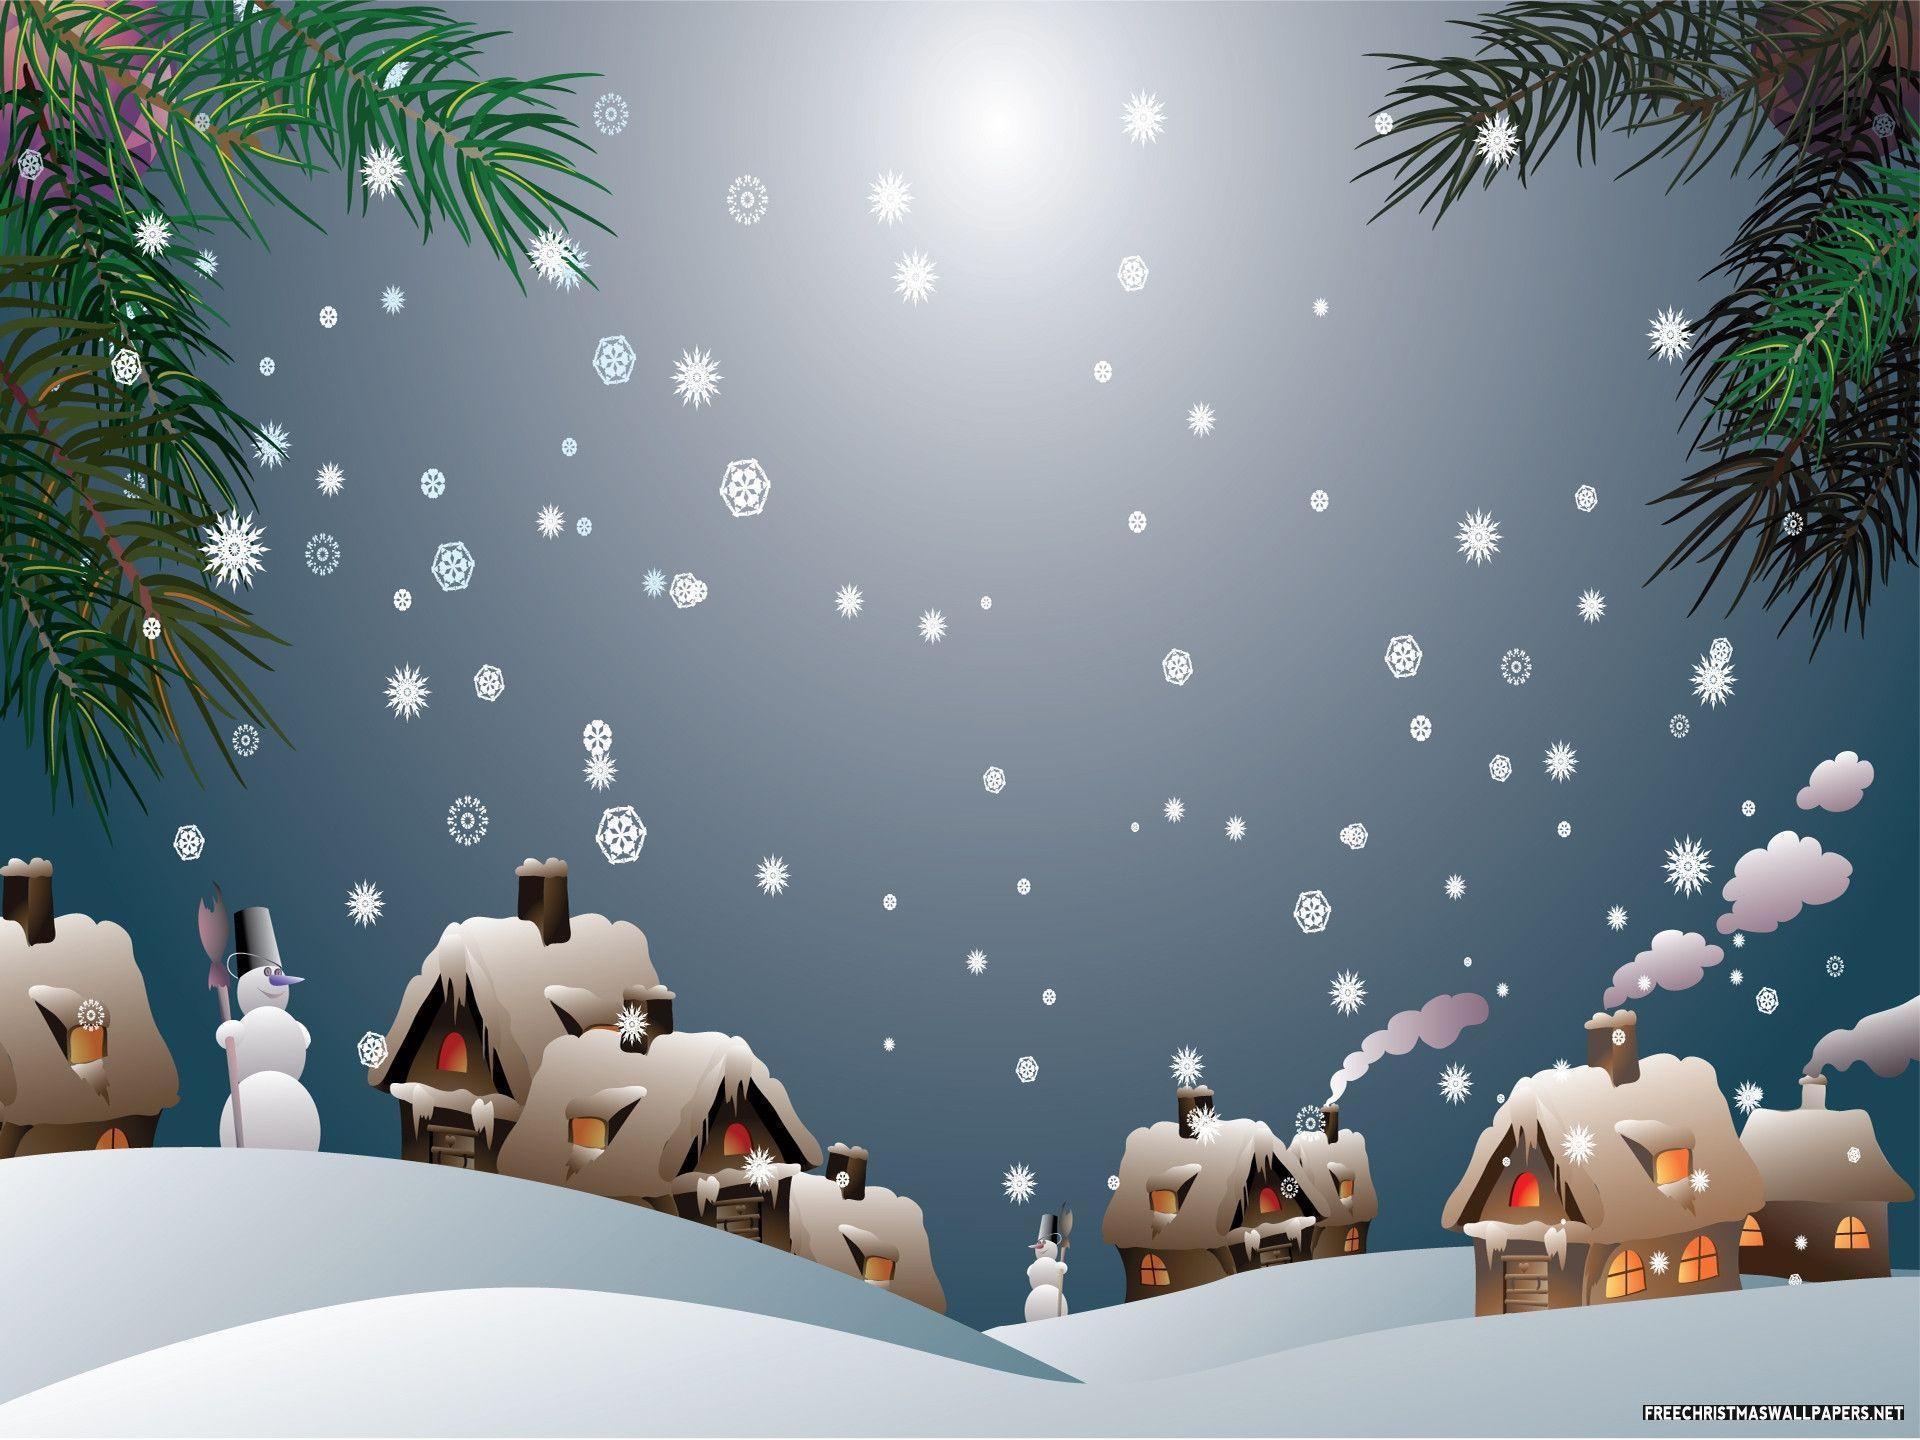 Snowy Christmas Village Wallpaper